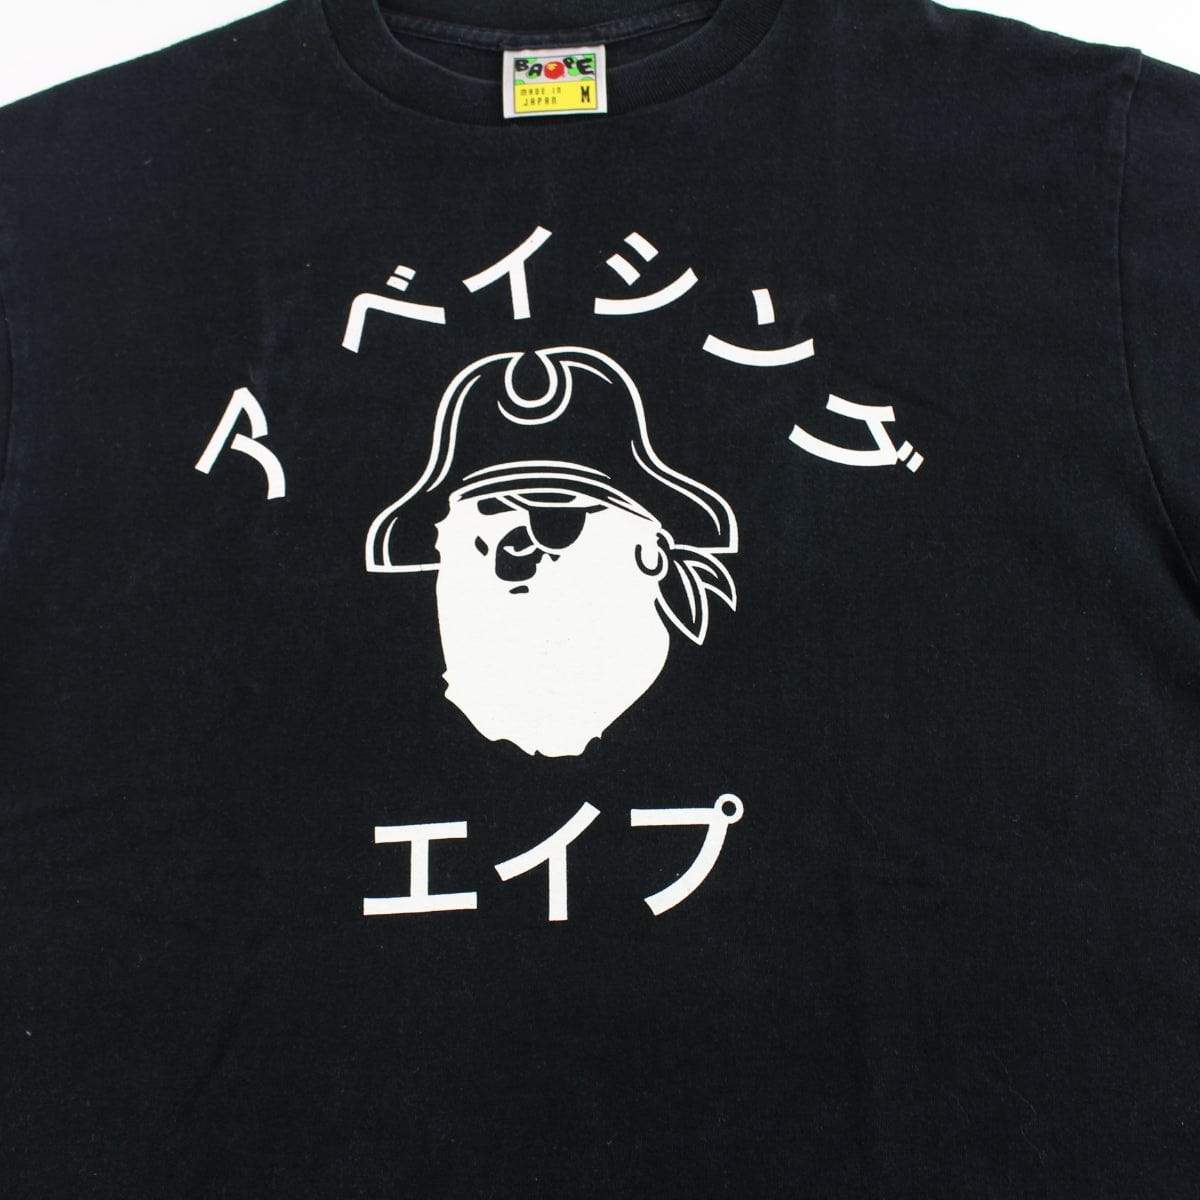 Bape Pirate Store Katakana college logo Tee Black - SaruGeneral